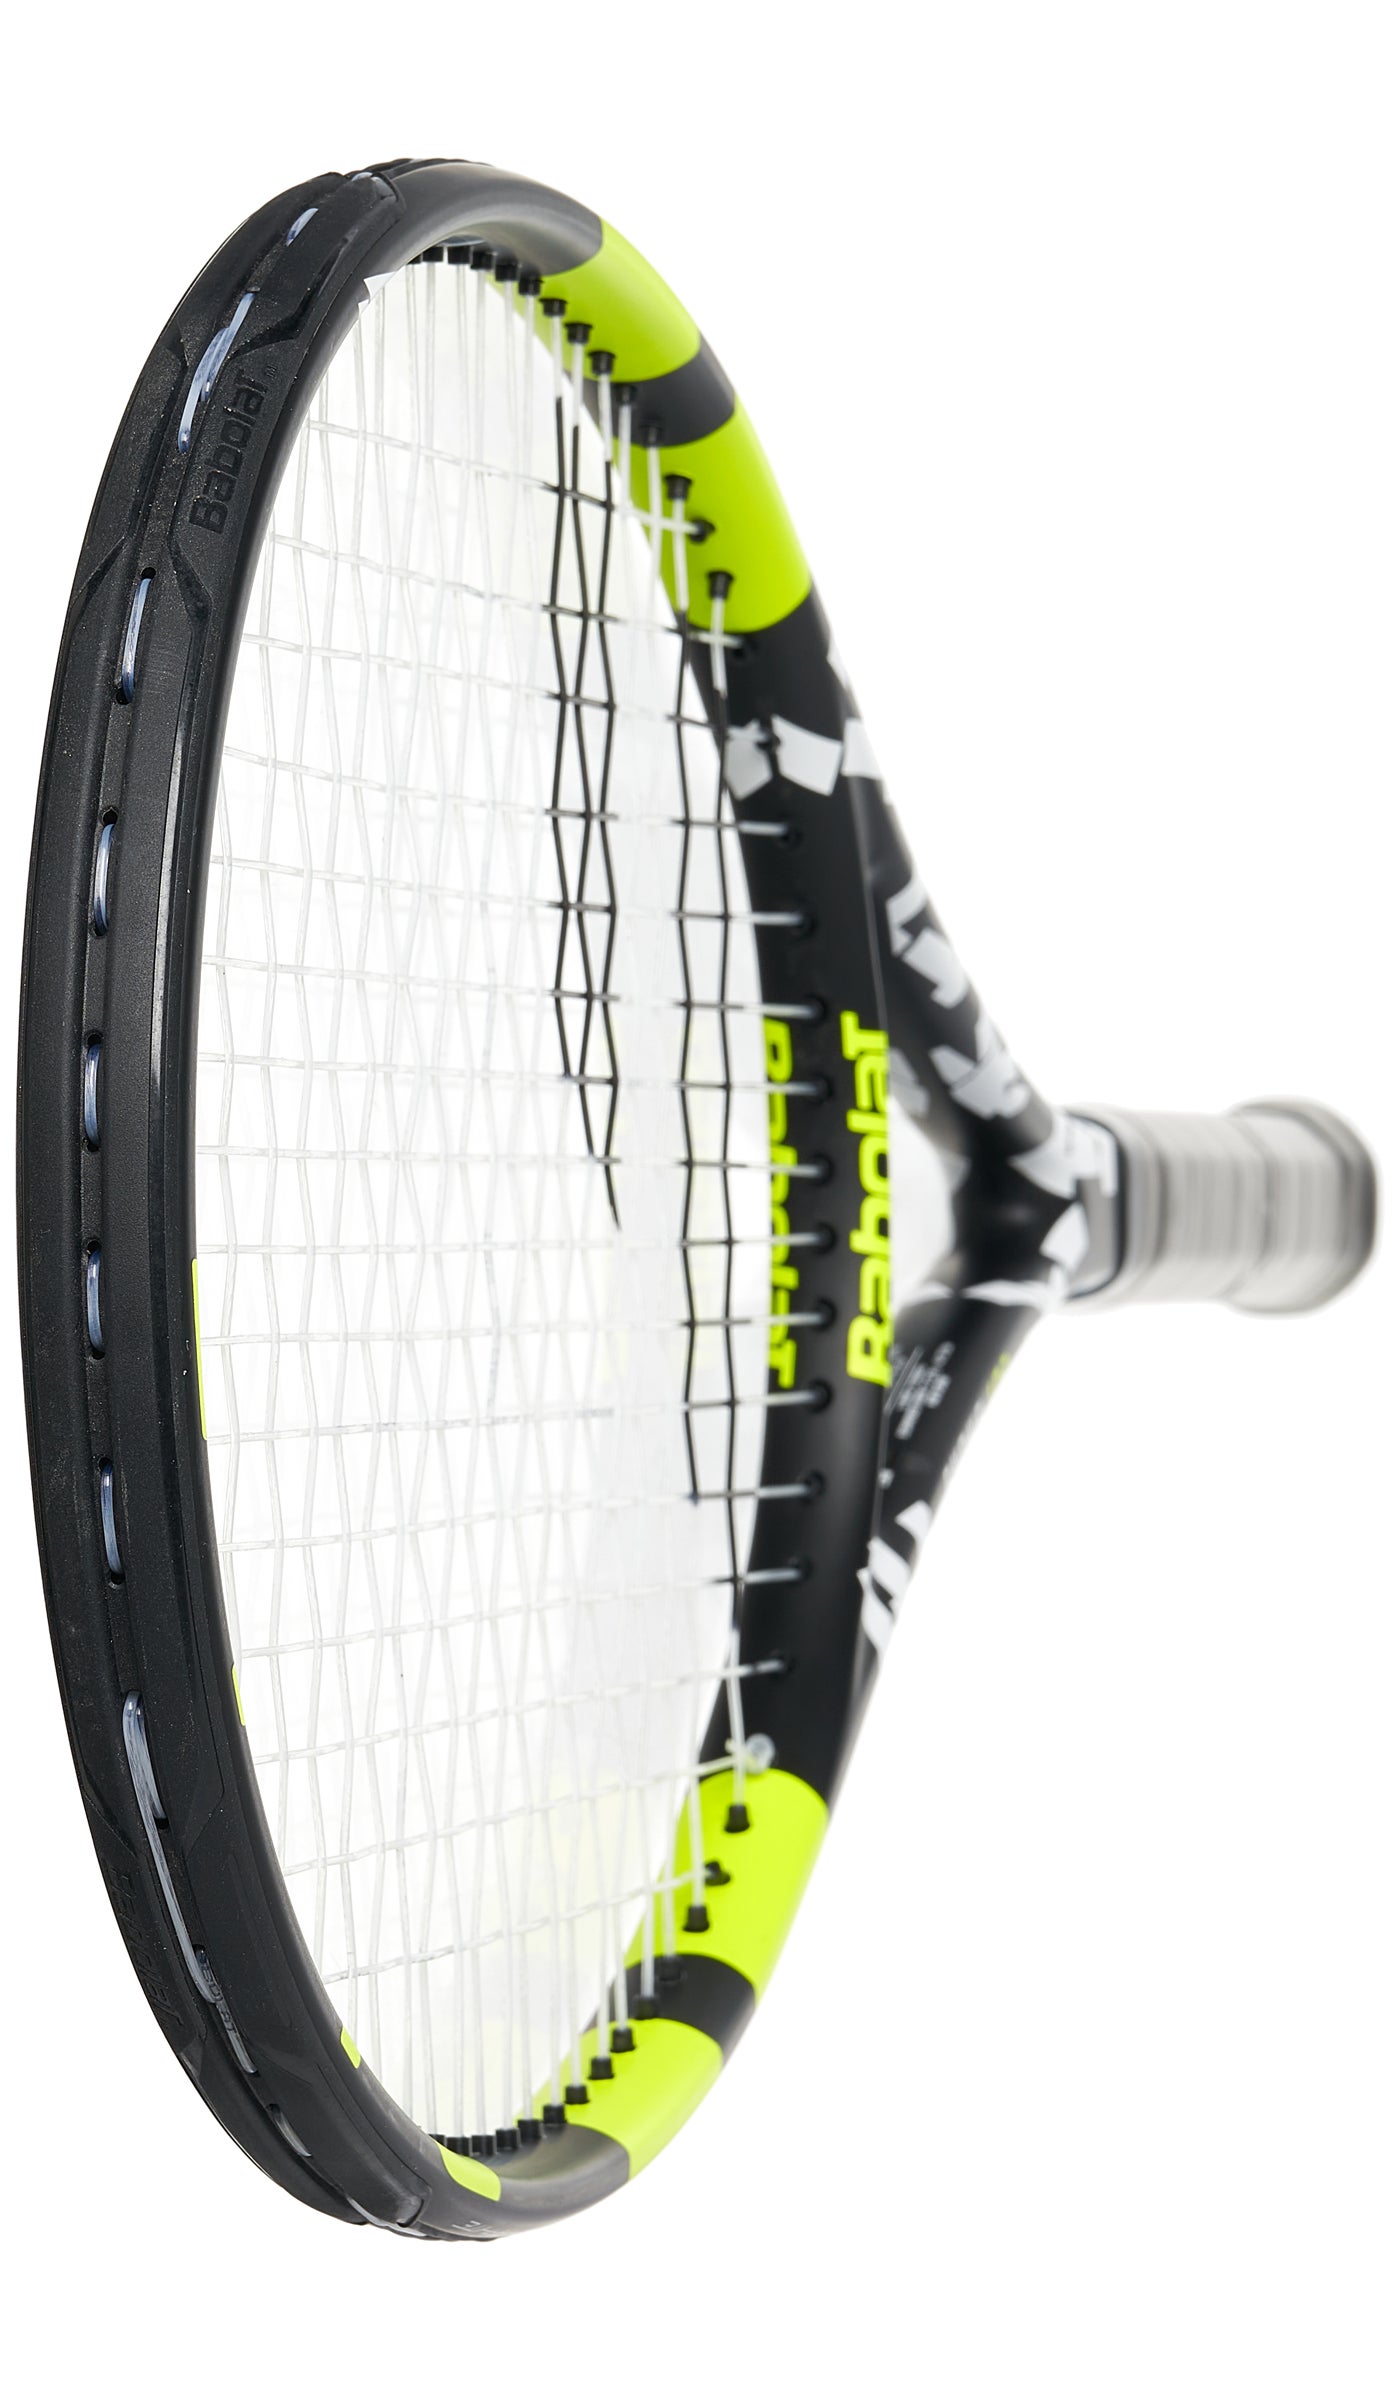 Babolat Evoke102 Grey/Yellow besaitet Tennis Racquet 